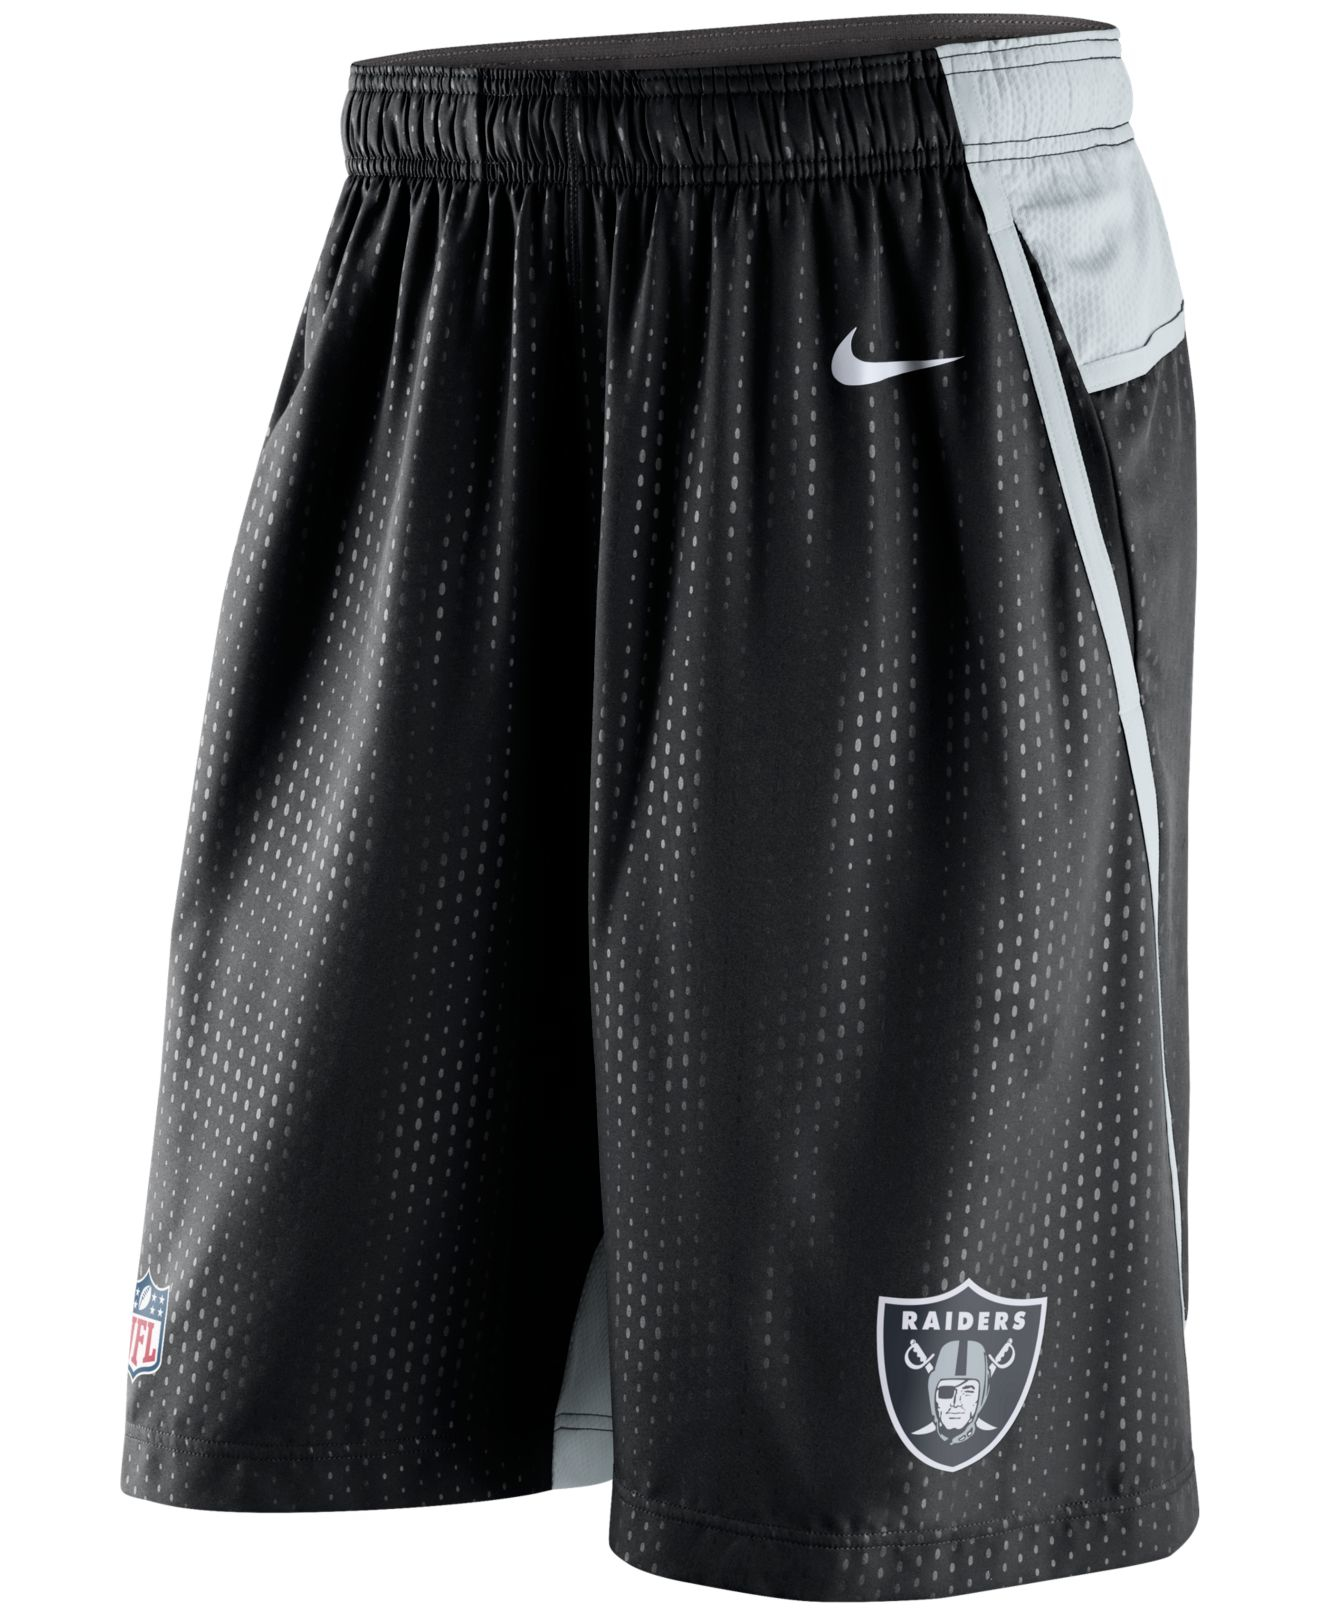 Lyst - Nike Men's Oakland Raiders Dri-fit Fly Xl 3.0 Shorts in Black ...